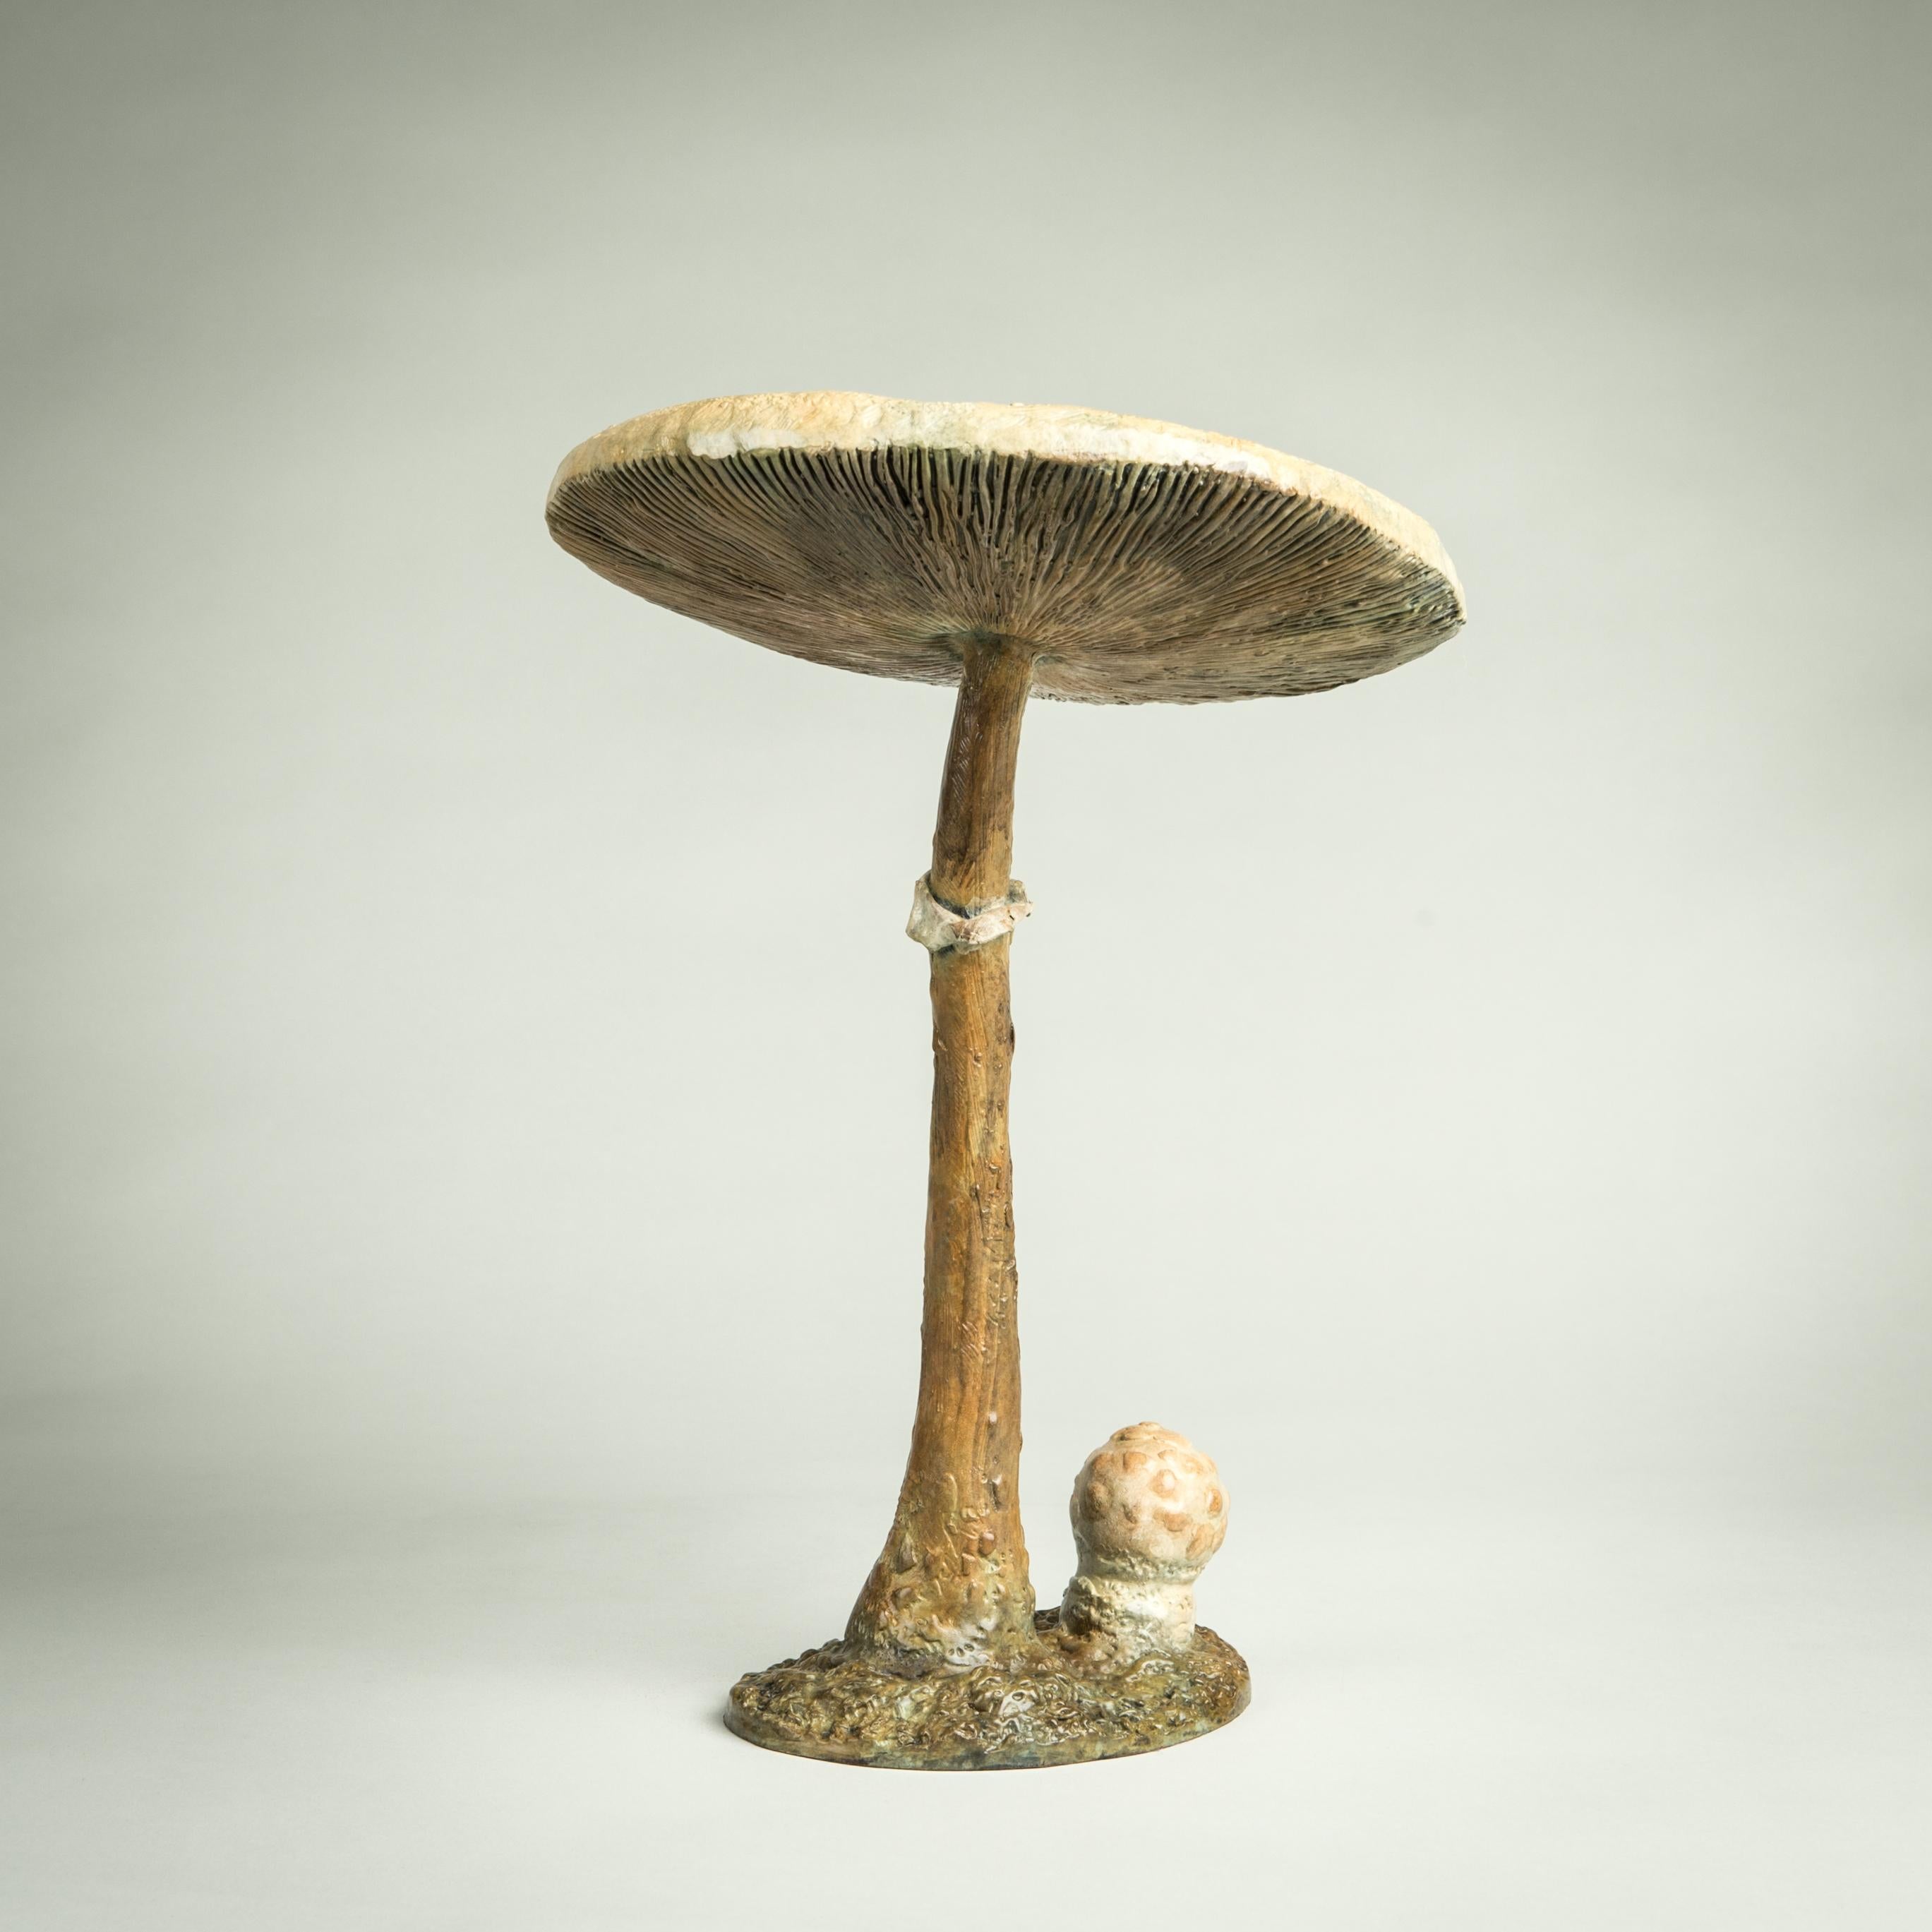 'Parasol Mushroom' Contemporary bronze sculpture of a mushroom, Wildlife - Sculpture by Richard Smith